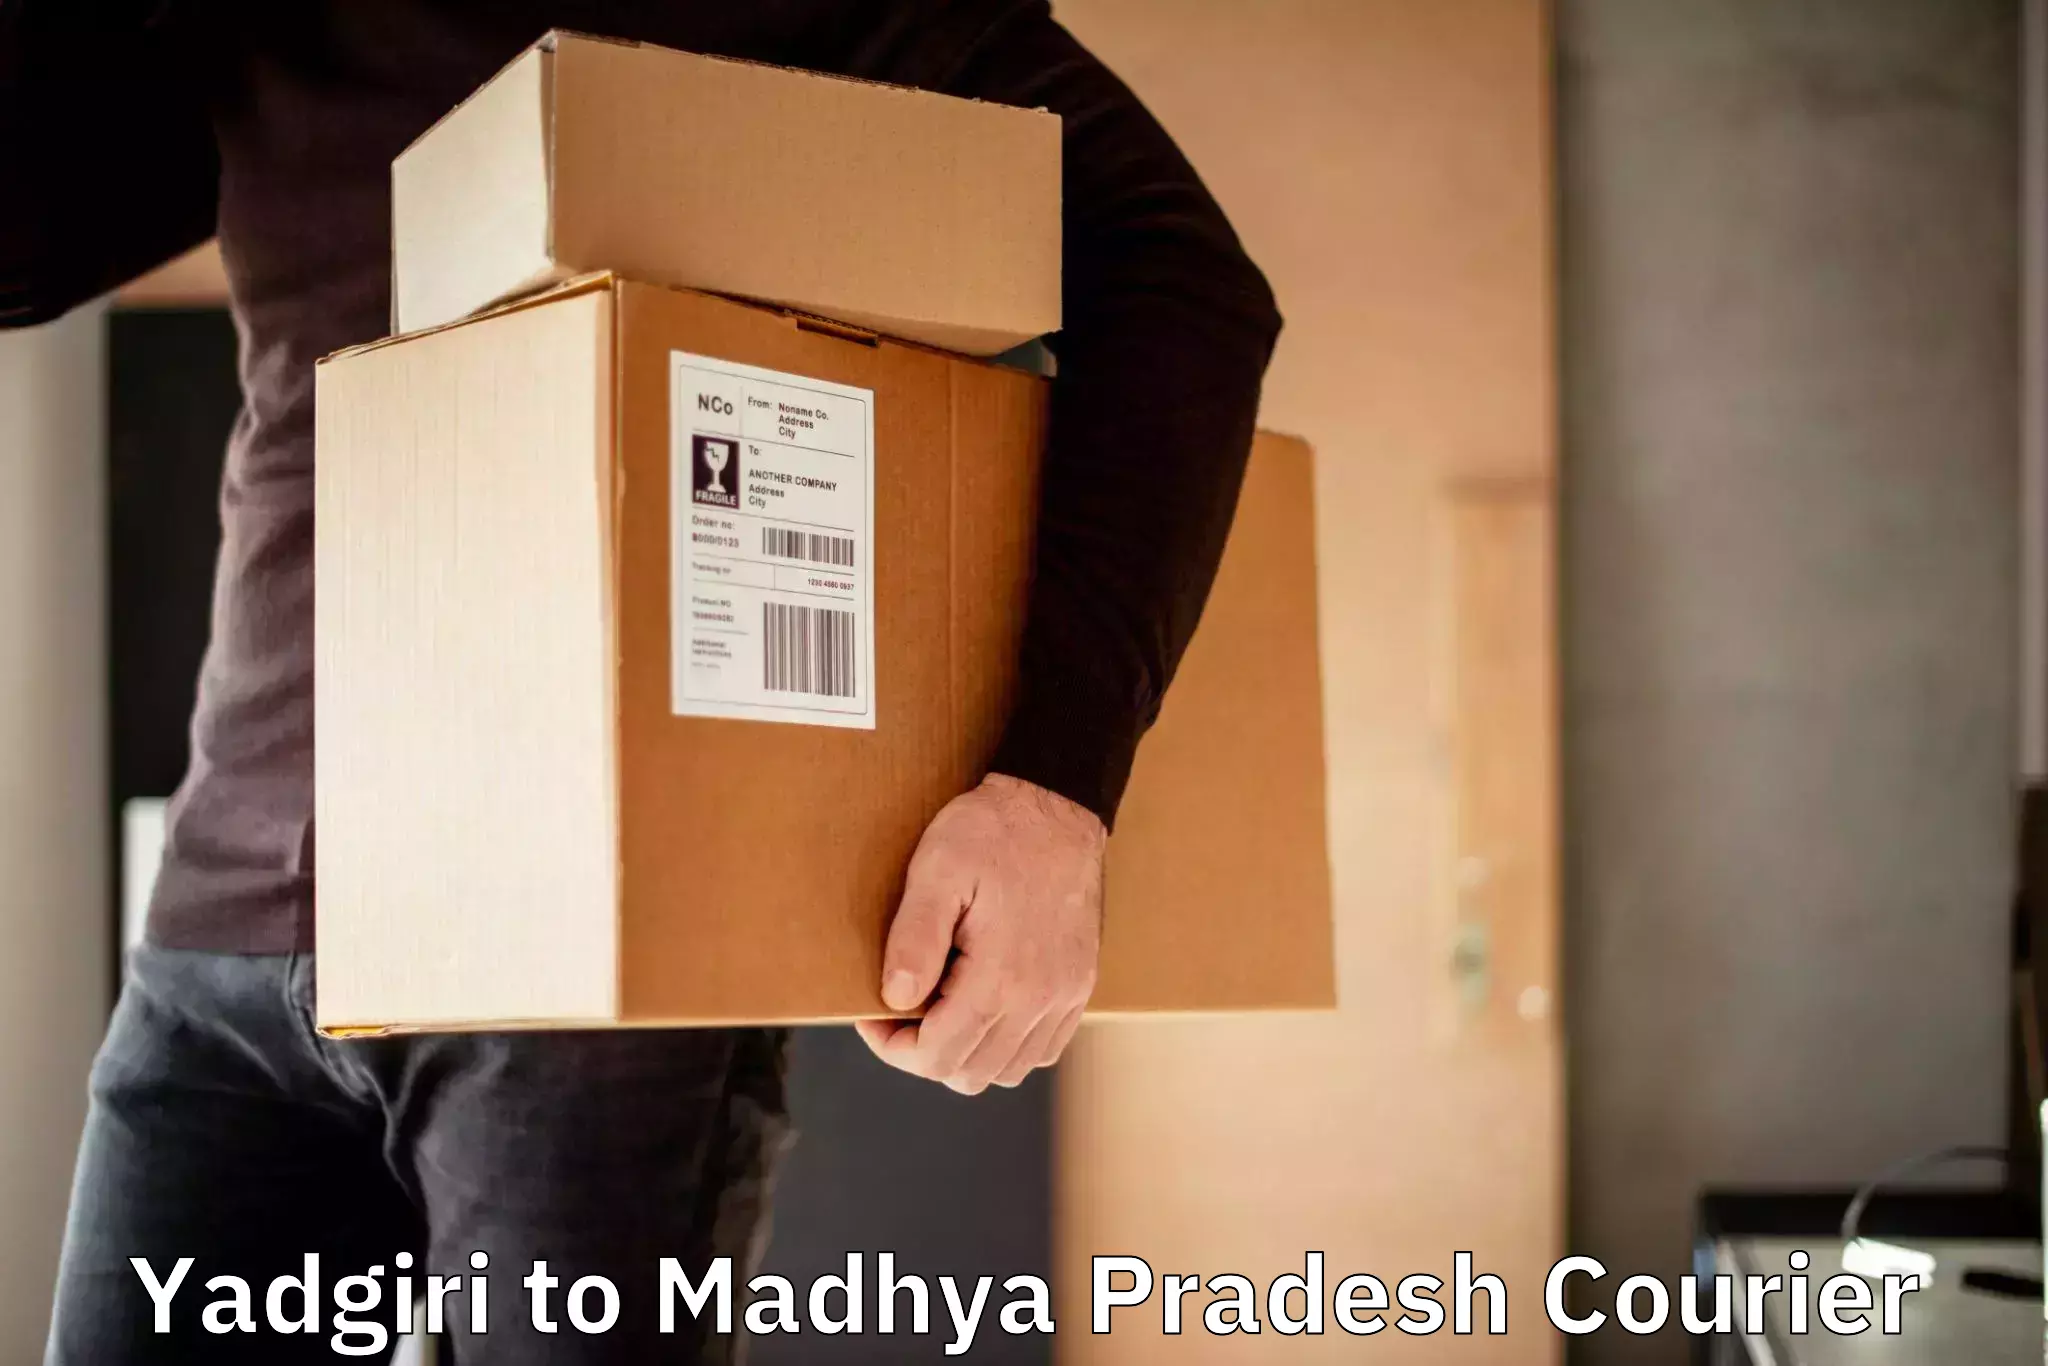 Express courier capabilities Yadgiri to Bhopal